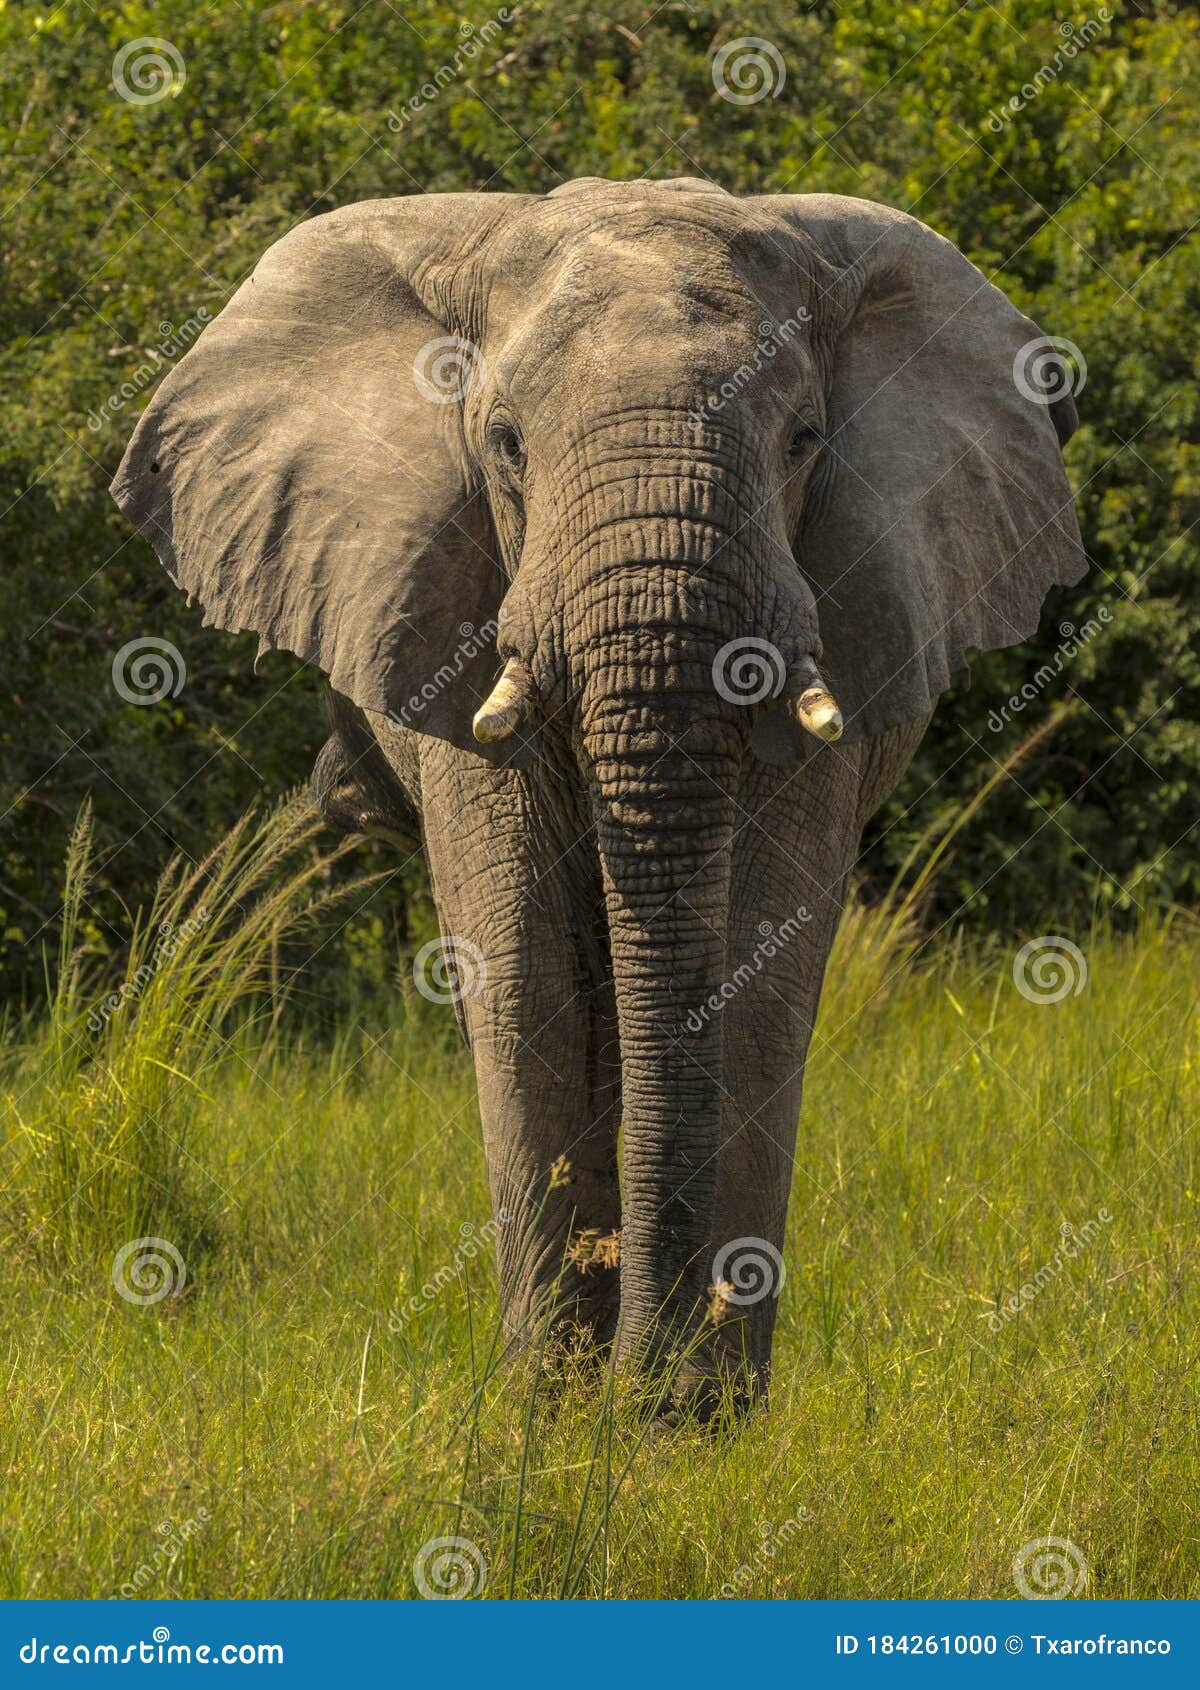 african elephant walks towards the camera